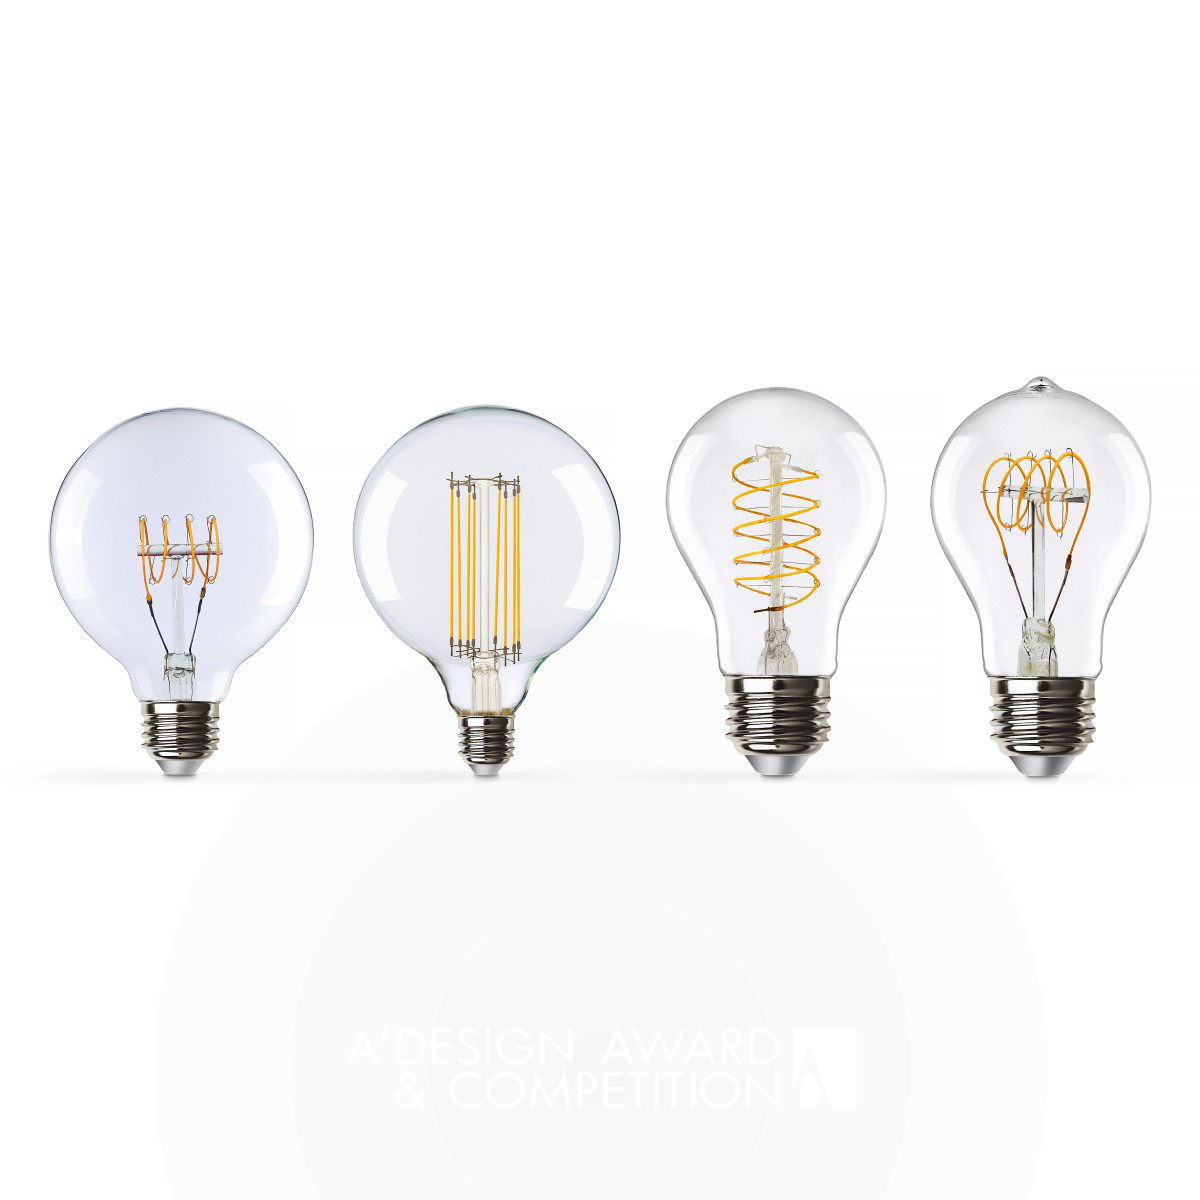 True Fila: Eine innovative LED-Lampe mit flexibler Filament-Technologie